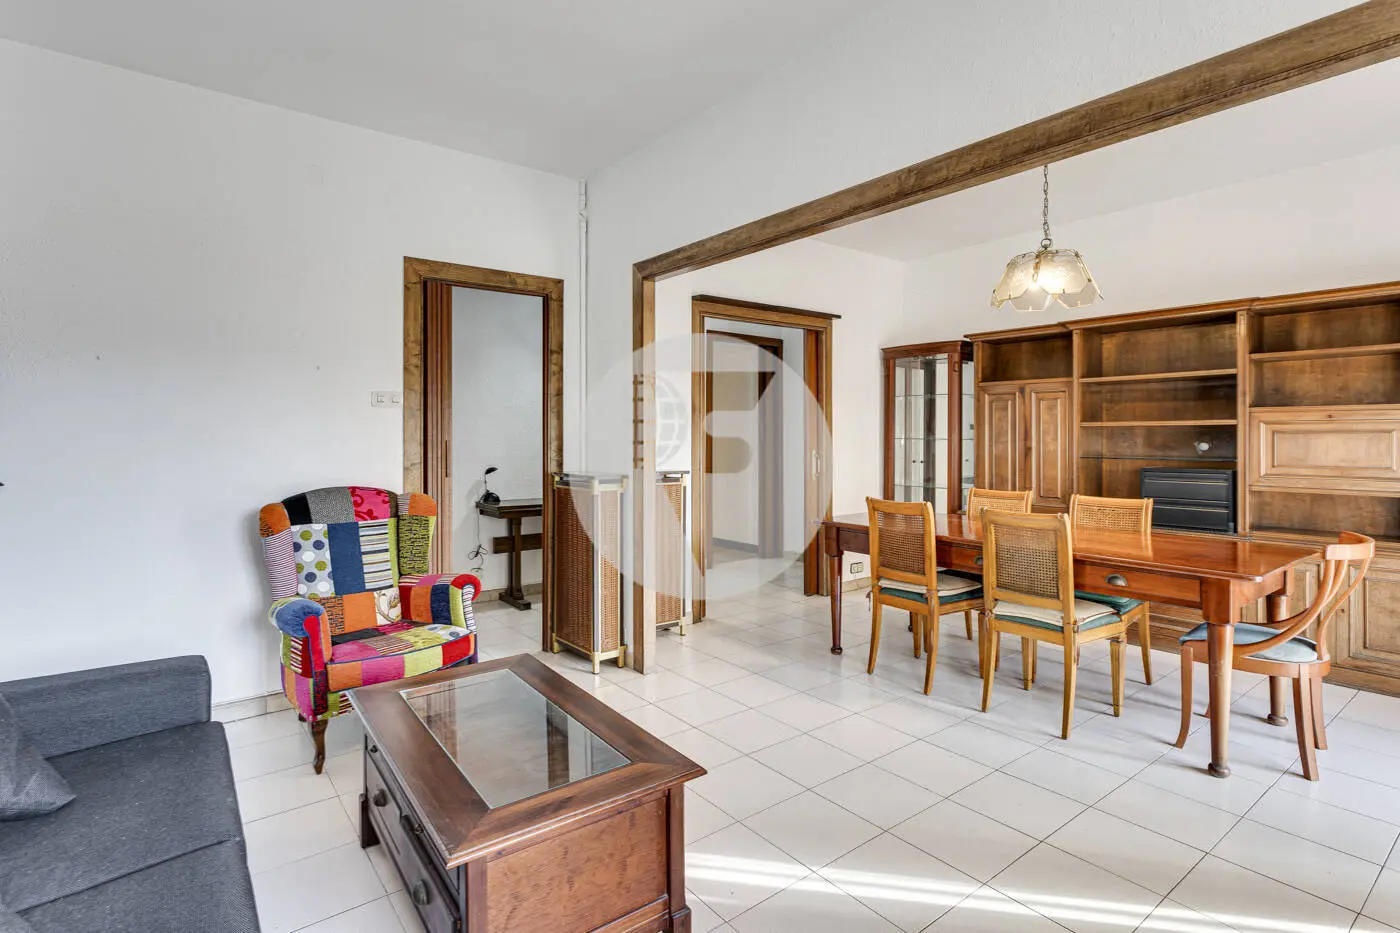 3-bedroom apartment located in the Nova Esquerra de l'Eixample neighborhood of Barcelona. 3